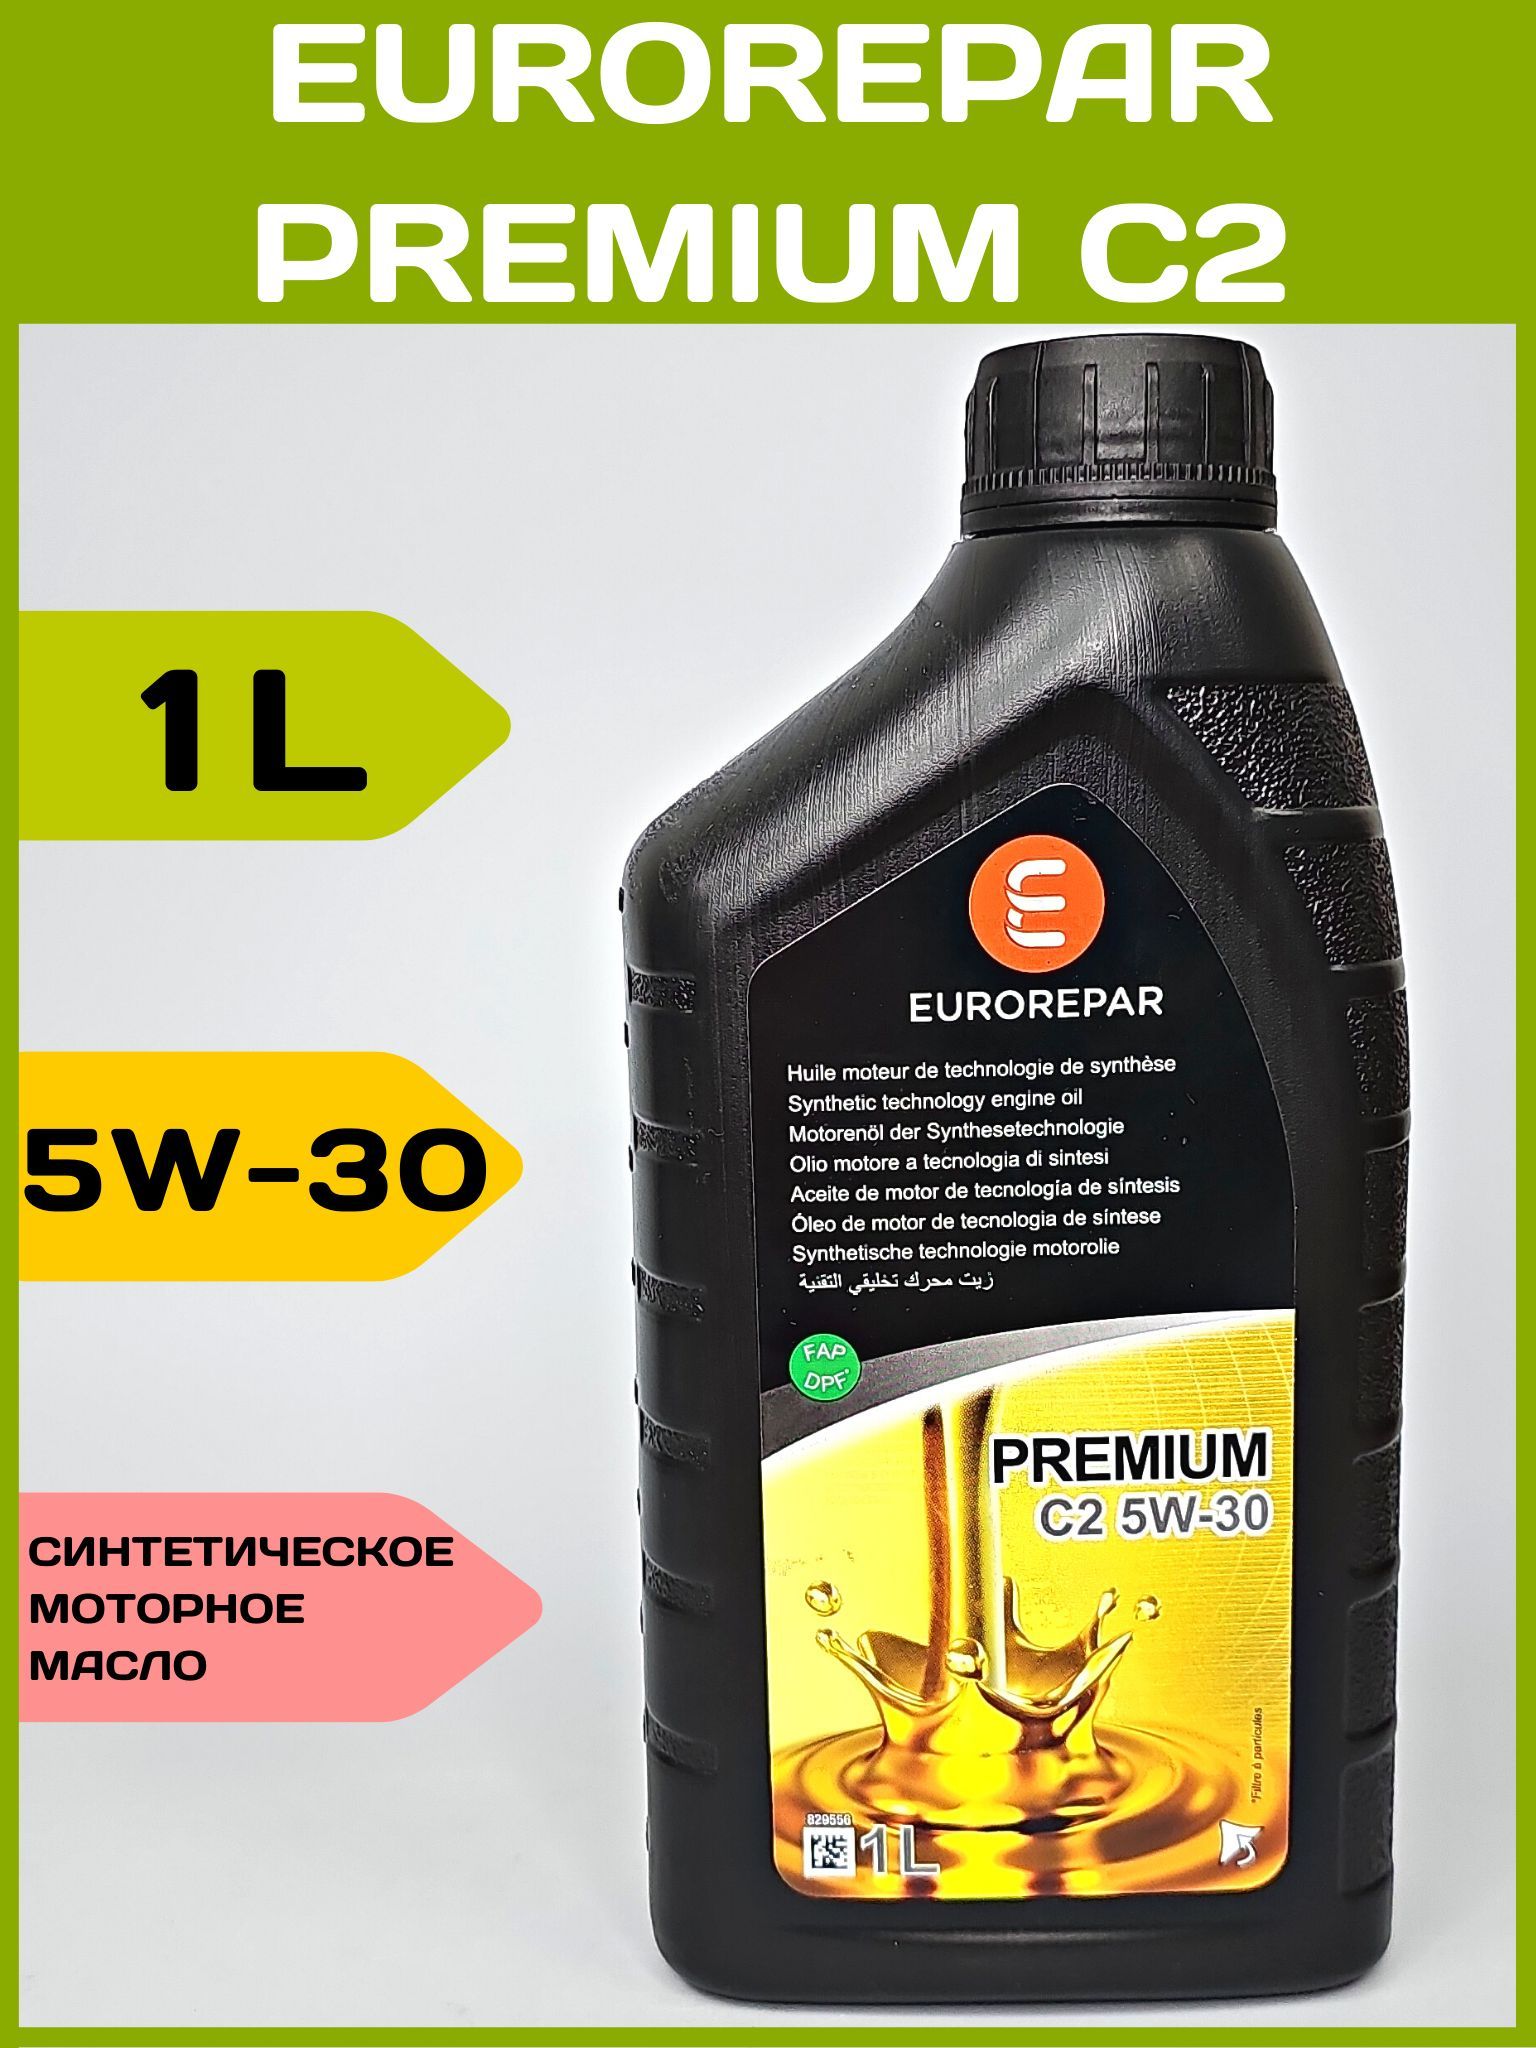 Еврорепар масло 5w30. Eurorepar c1 5w30. Масло моторное Eurorepar Premium c2 5w-30. Eurorepar Premium c2 5w-30 купить.